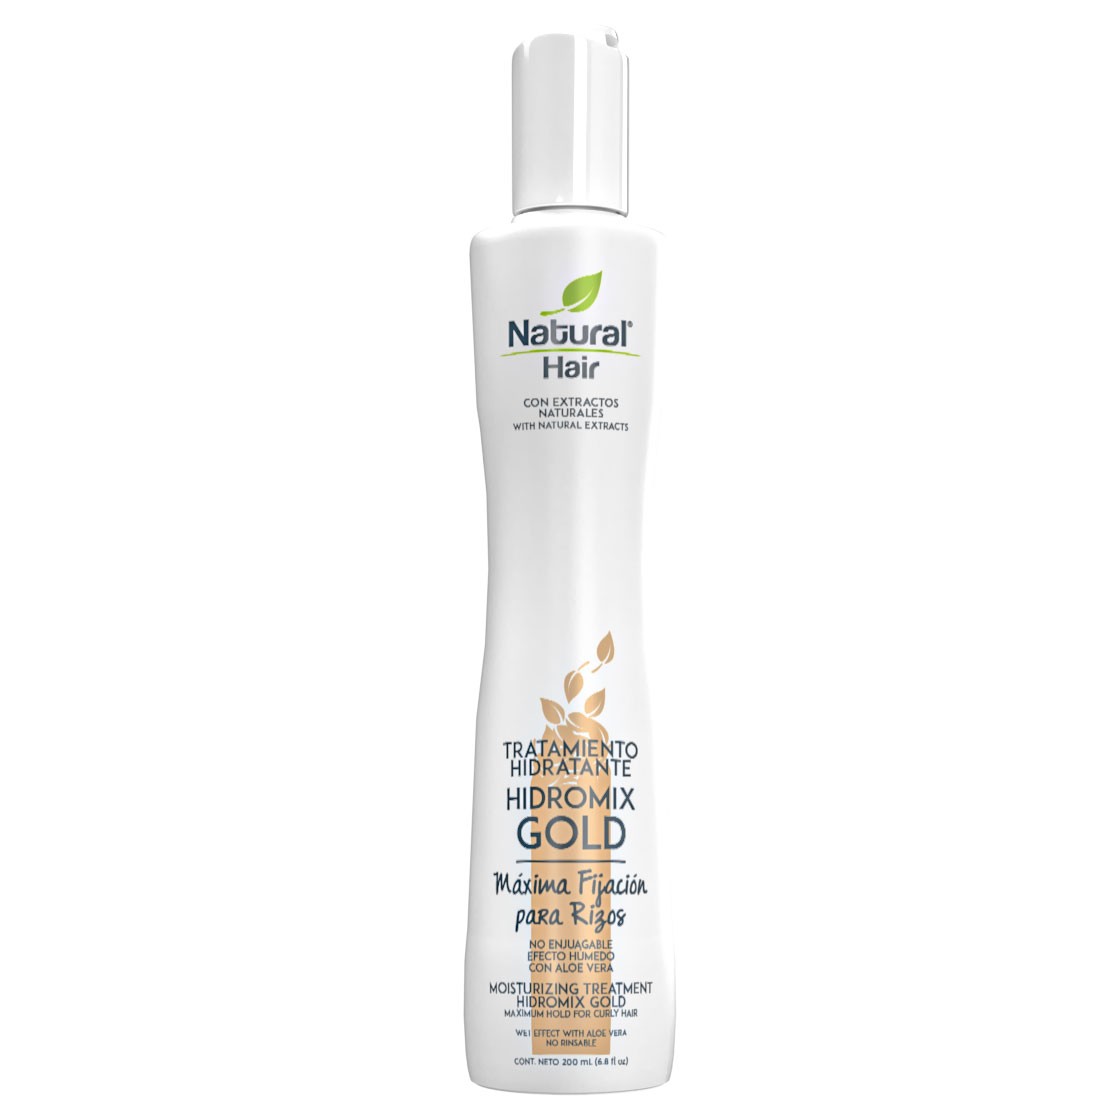 Tratamiento Hidratante HidroMix Gold - Natural Hair